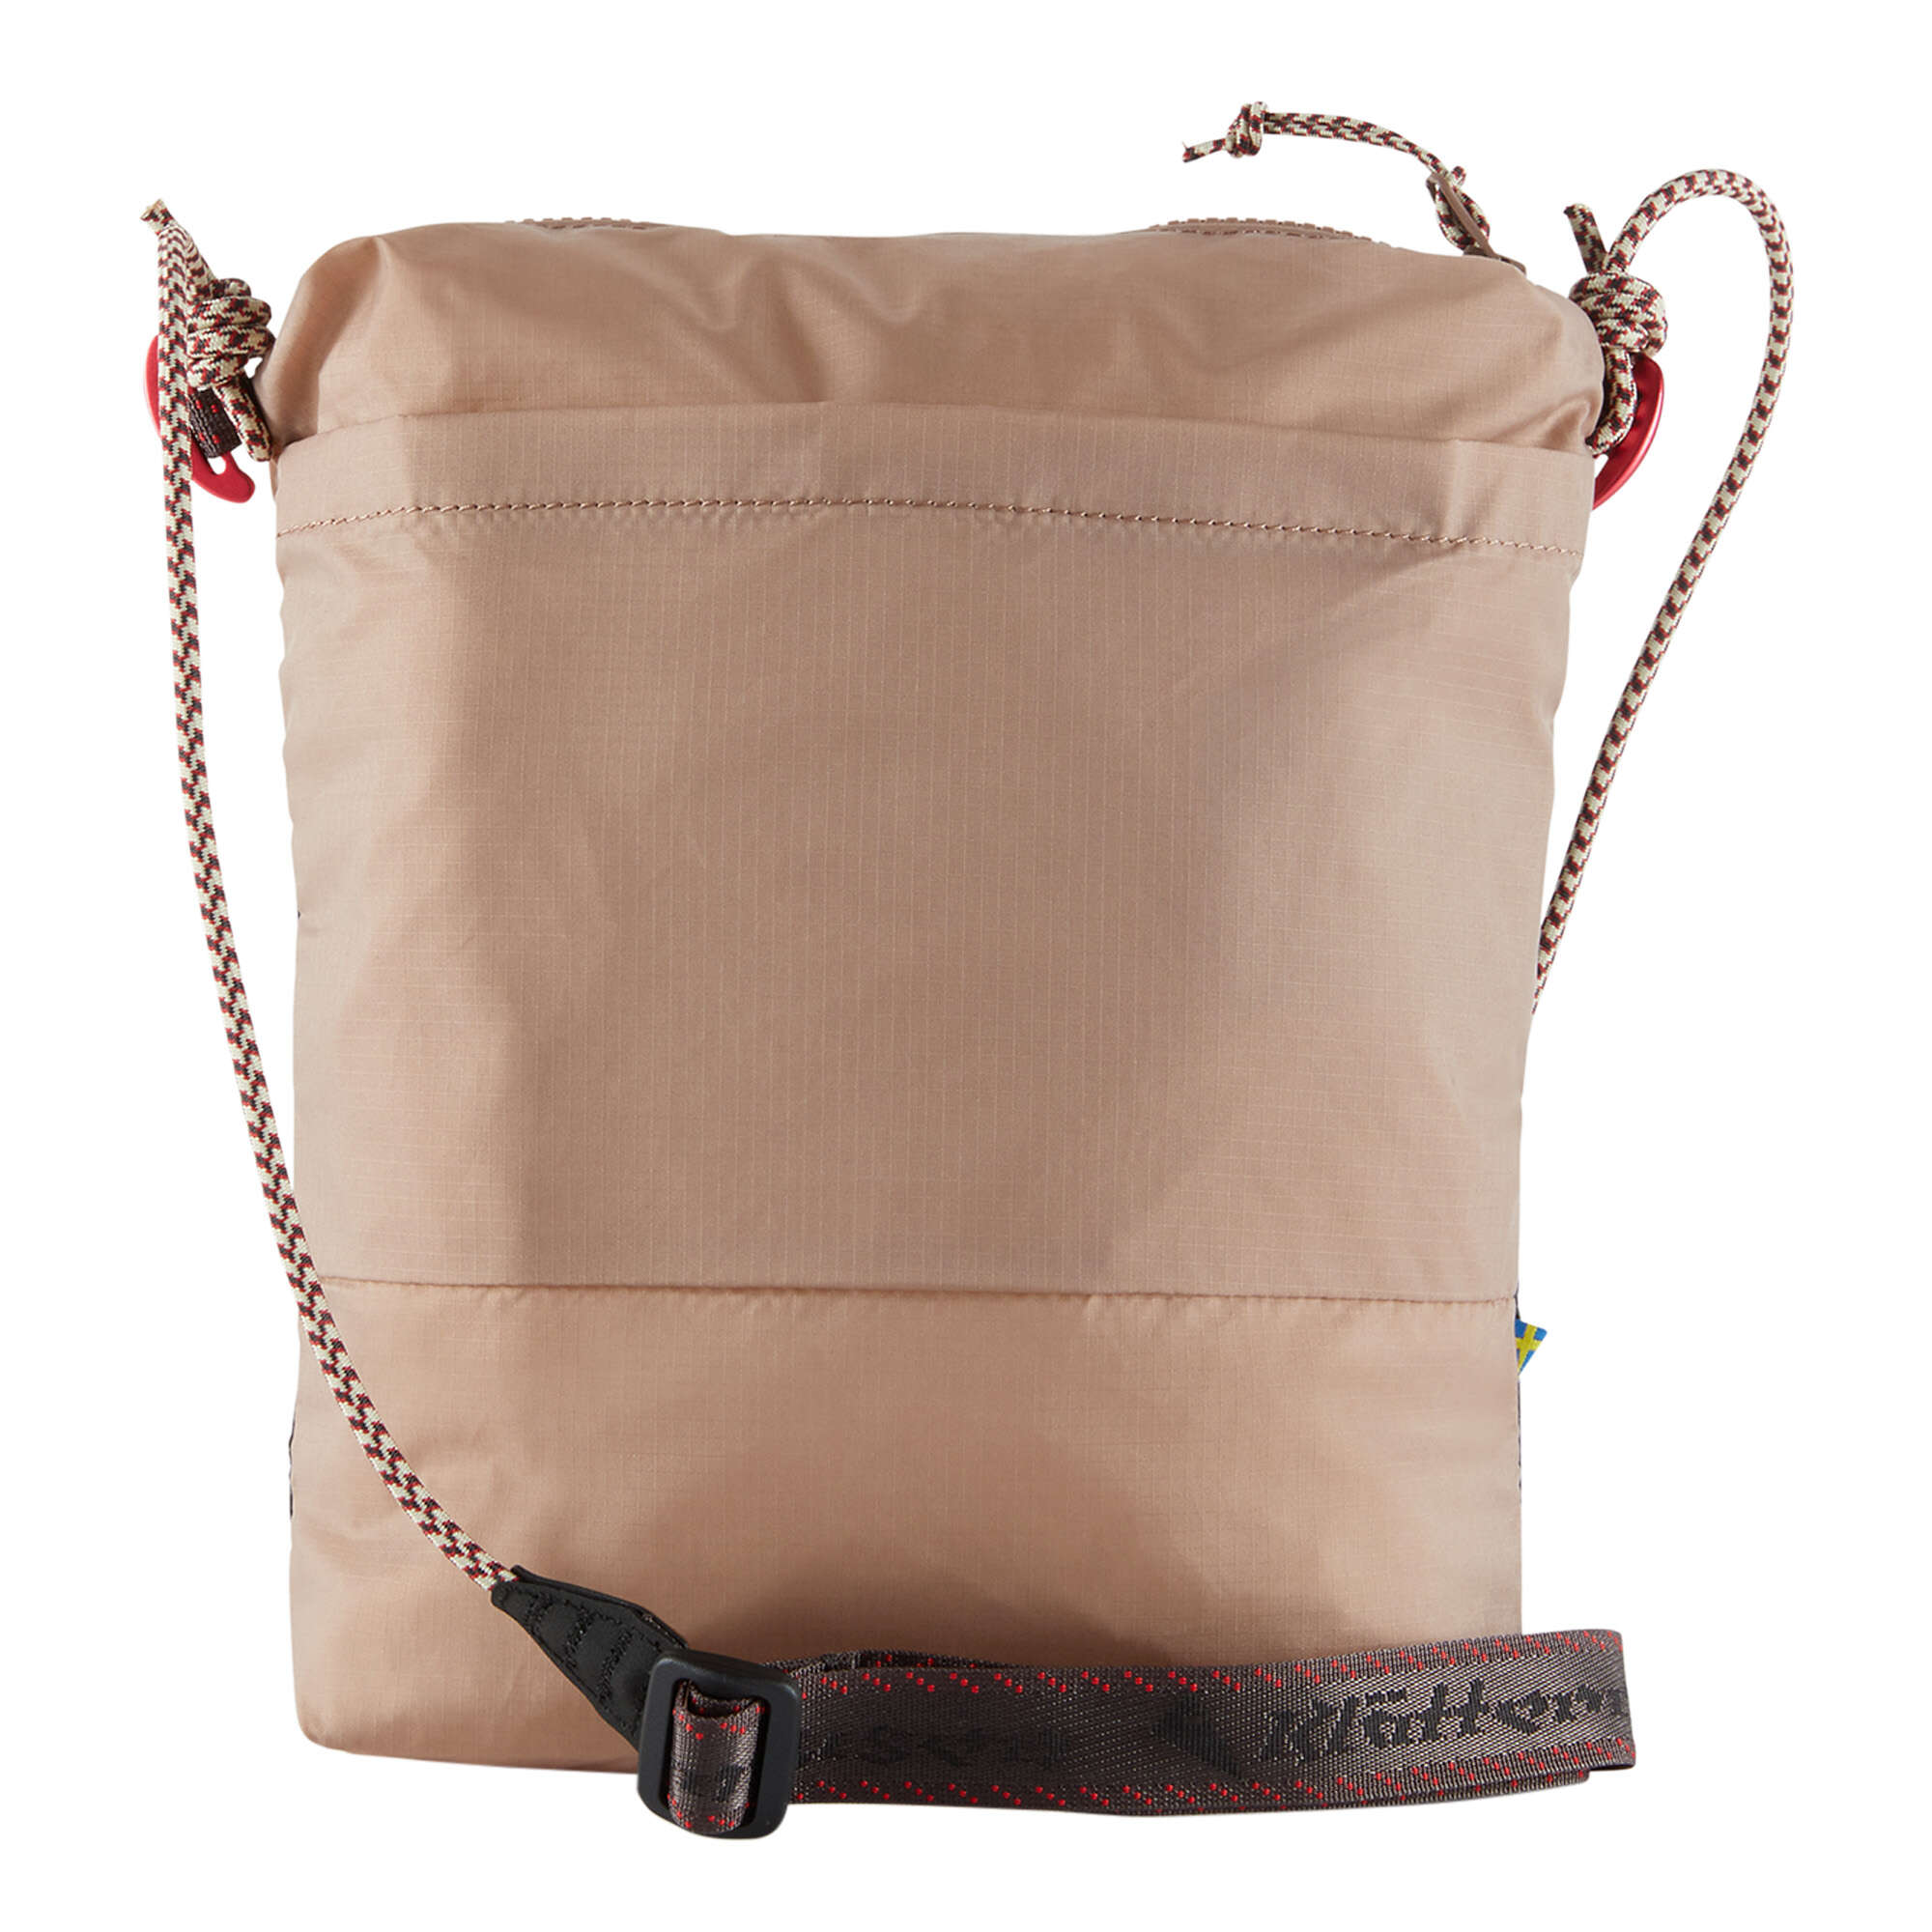 78 Retina Multislot Bag - Algir Multislot Bag Limited Edition